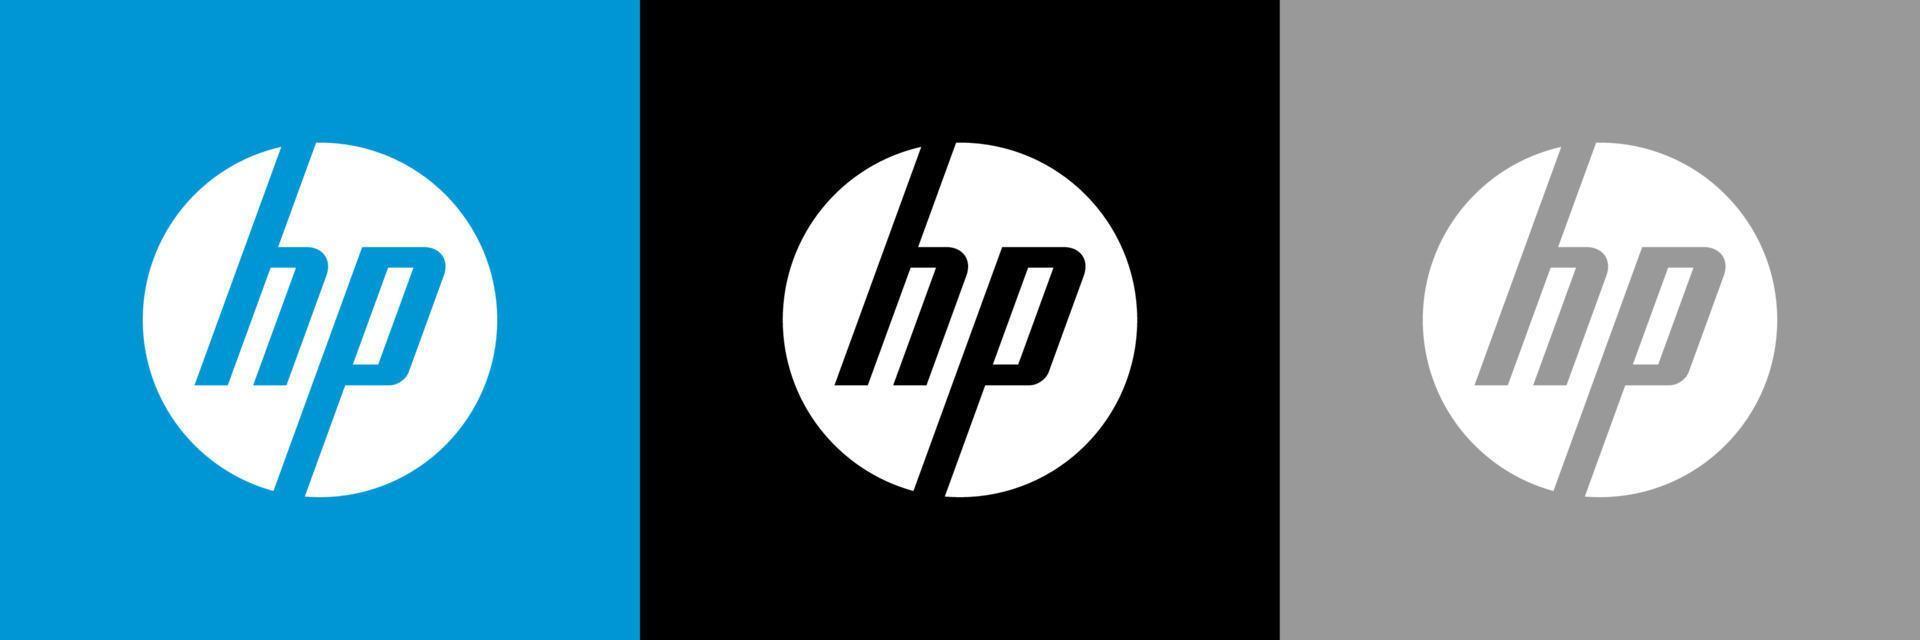 hp logo vector, hp icono gratis vector